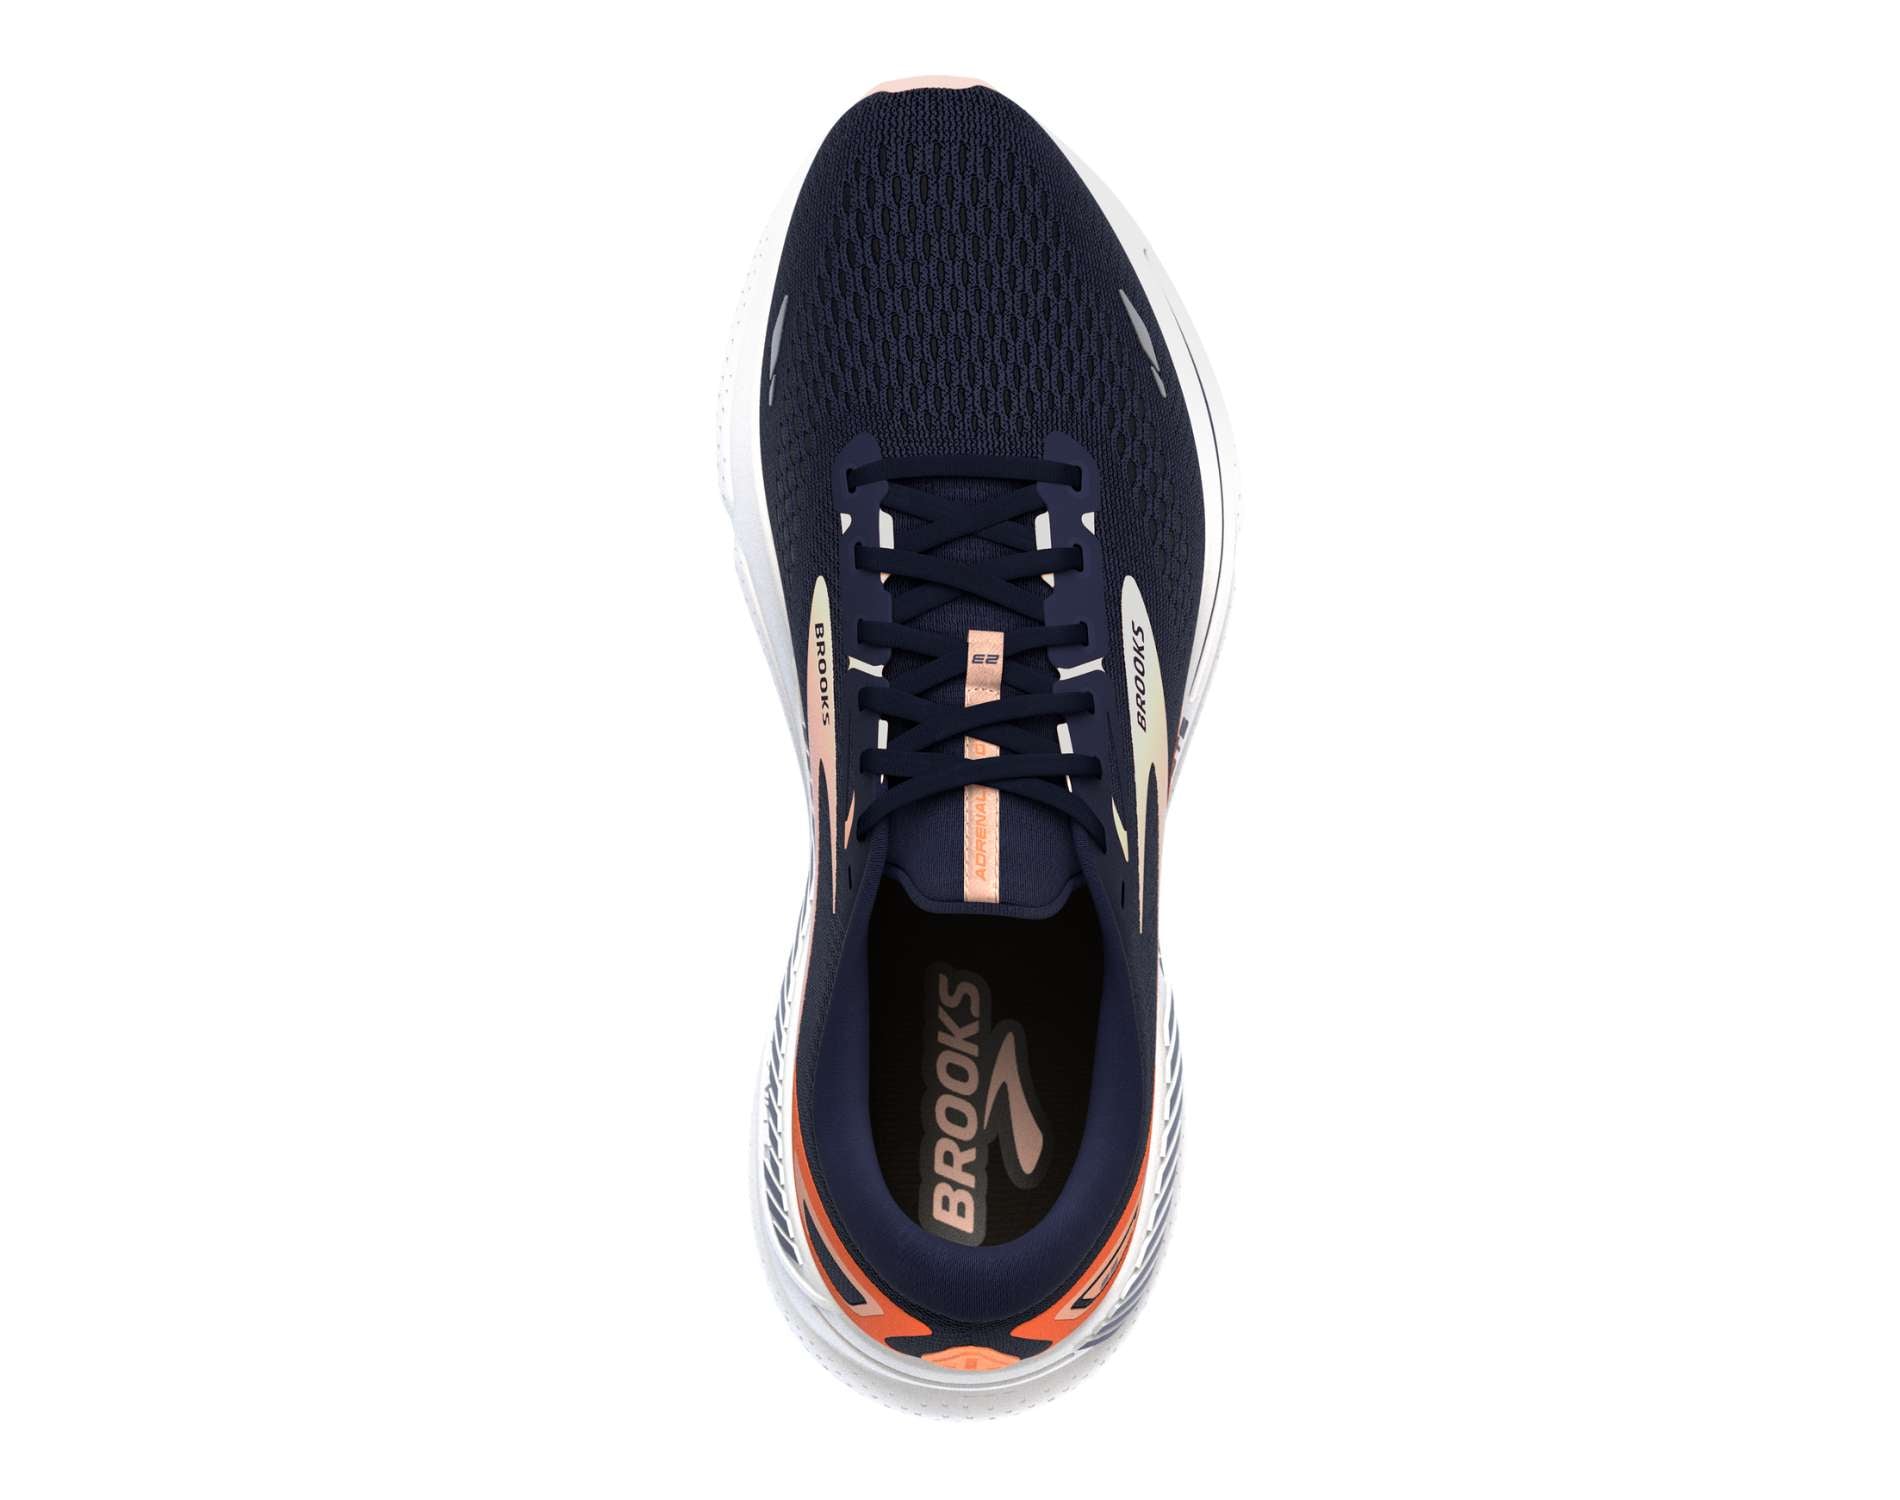 Brooks Adrenaline GTS 23 womens running shoe in standard width in peacoat tangerine peach colour